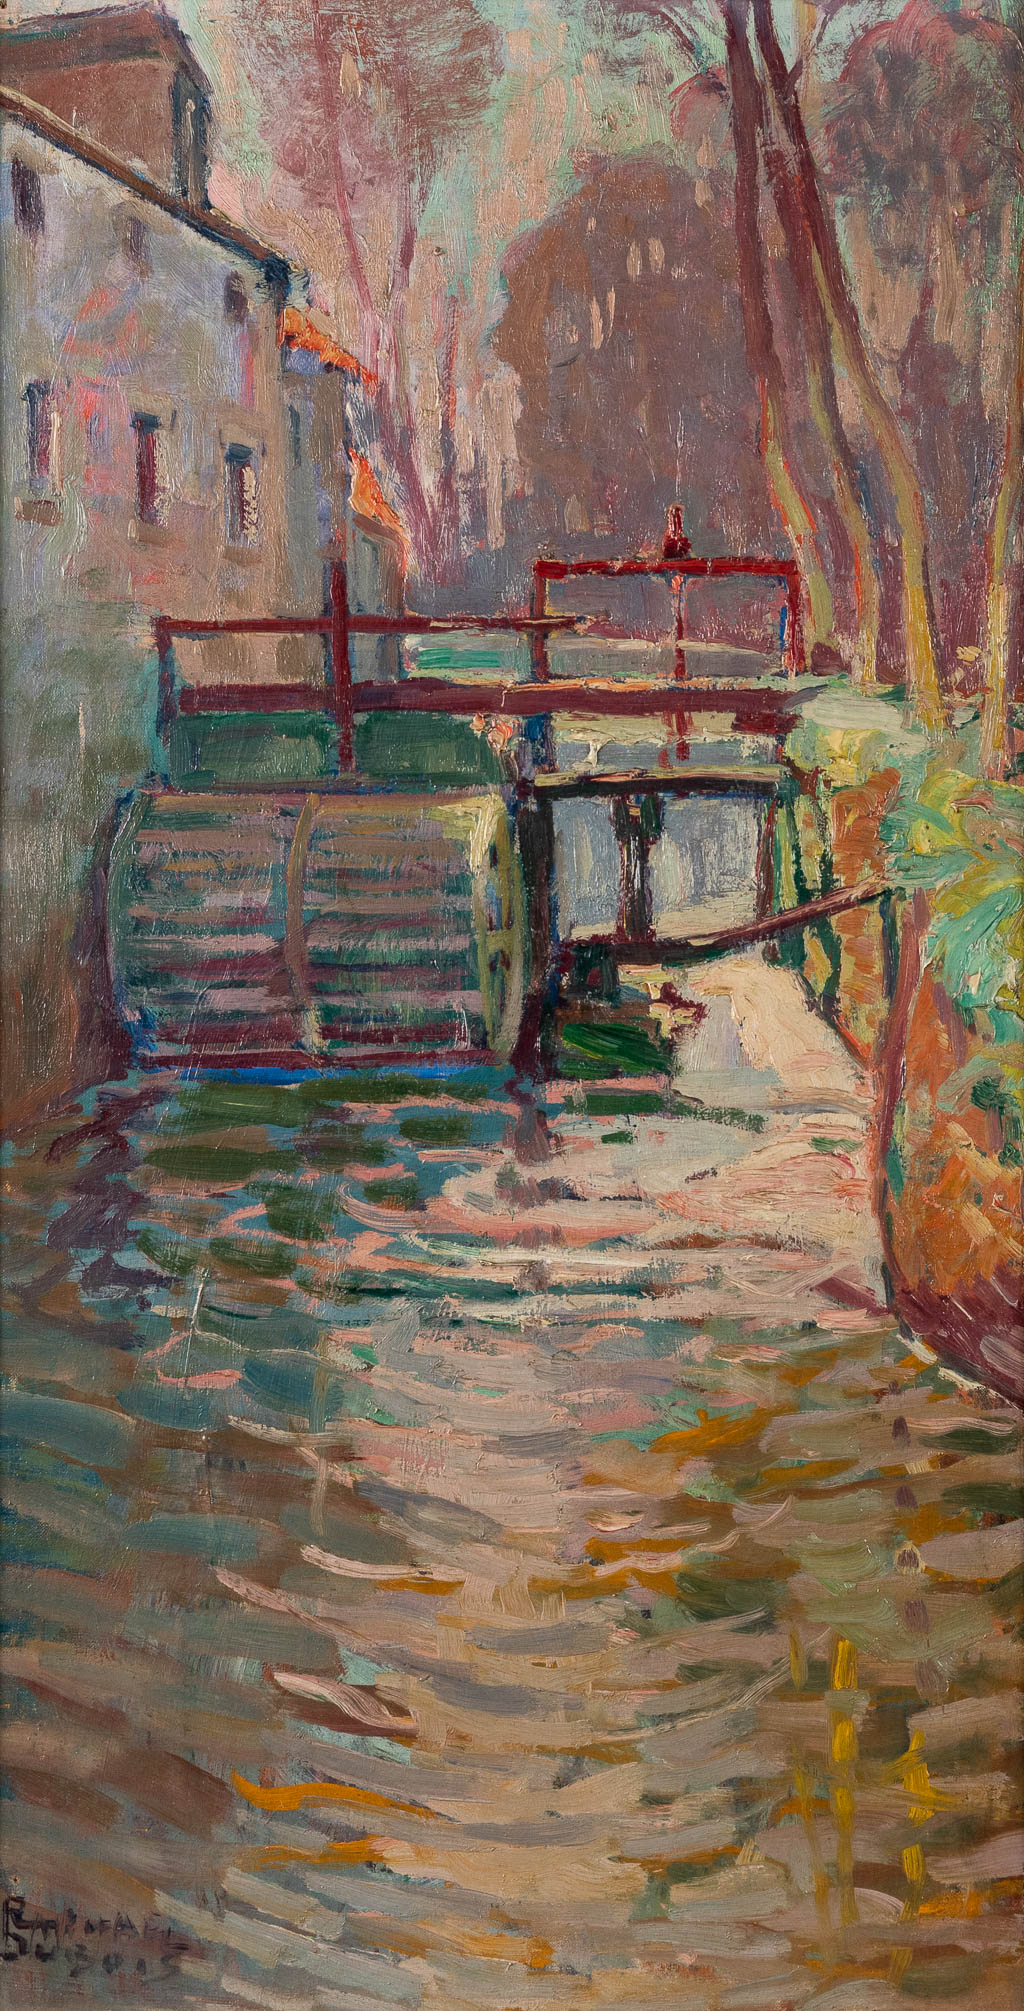 Raphaël DUBOIS (1888-1960) 'Water Mill' oil on canvas. (W:37 x H:70 cm)